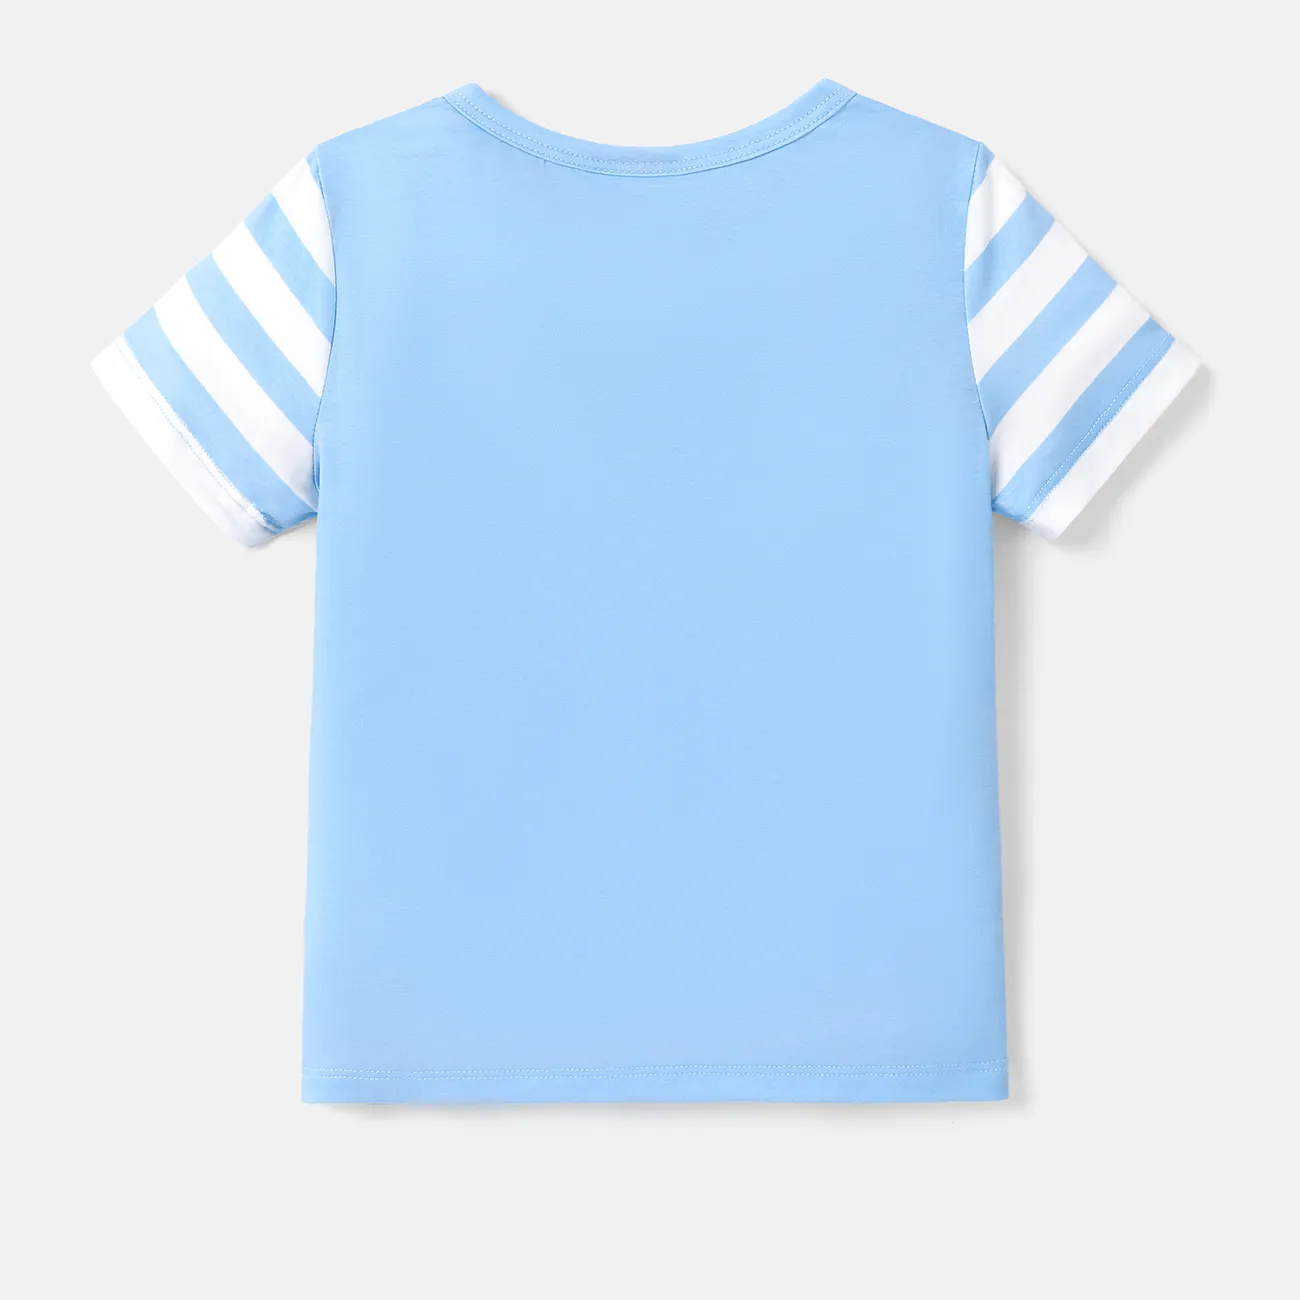 Glücksbärchis Kleinkinder Unisex Kindlich Bär Kurzärmelig T-Shirts blau big image 1